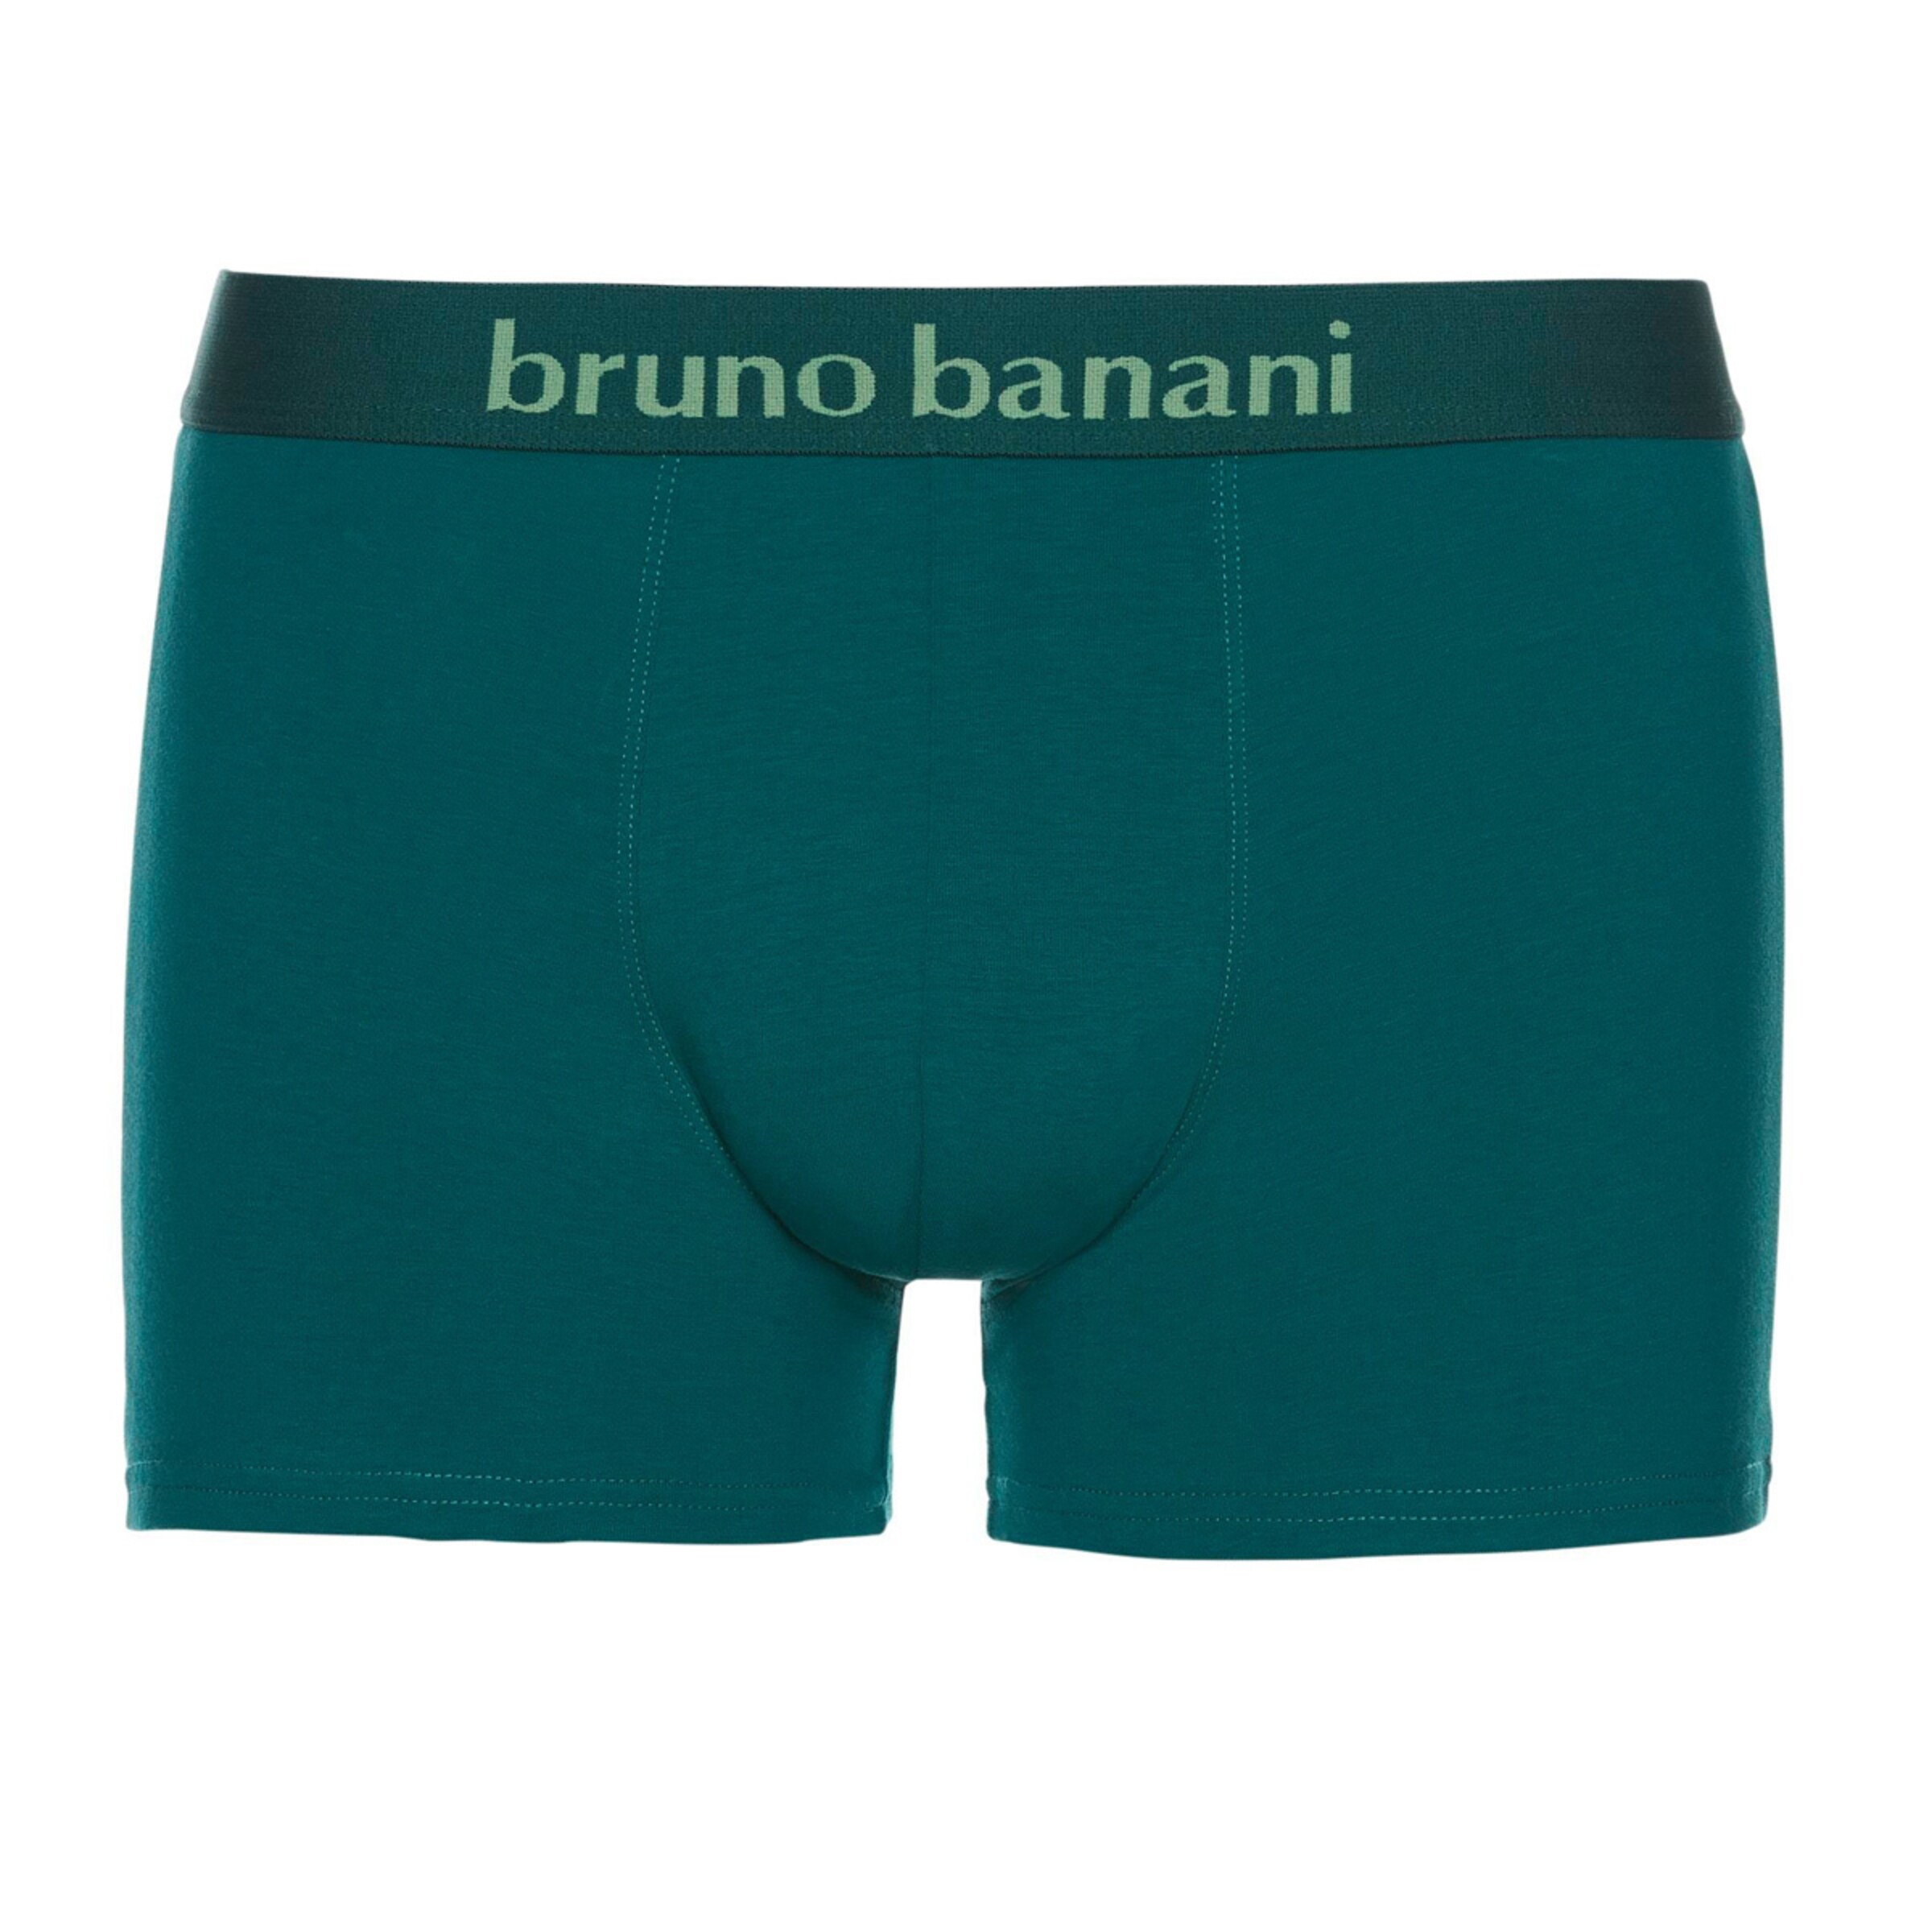 Sous-vêtements Boxers BRUNO BANANI en Vert 